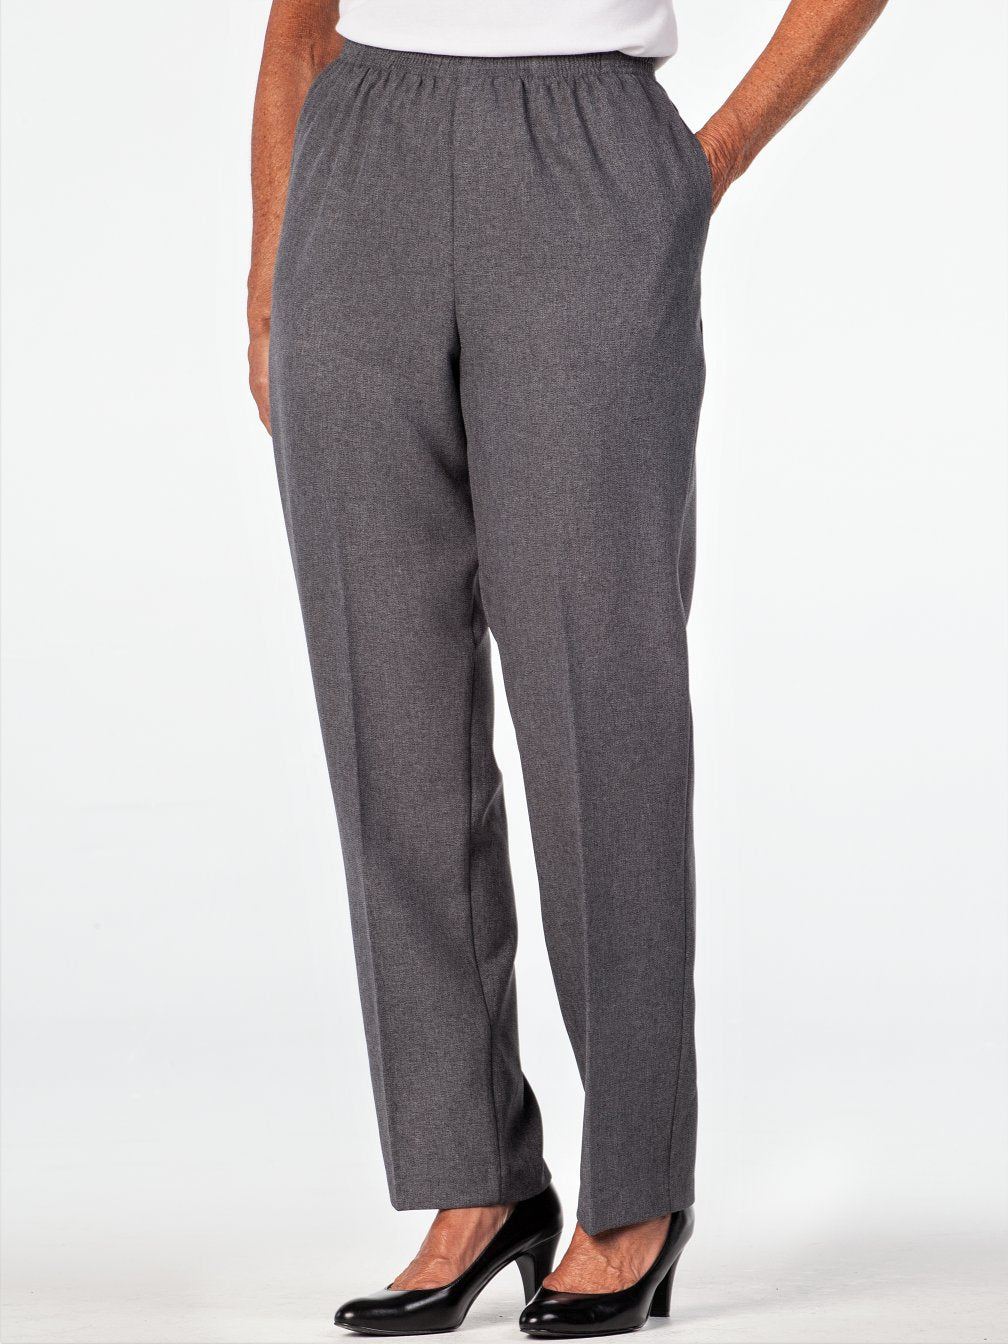 16 Pairs of Elastic-Waist Pants to Buy ASAP – PureWow